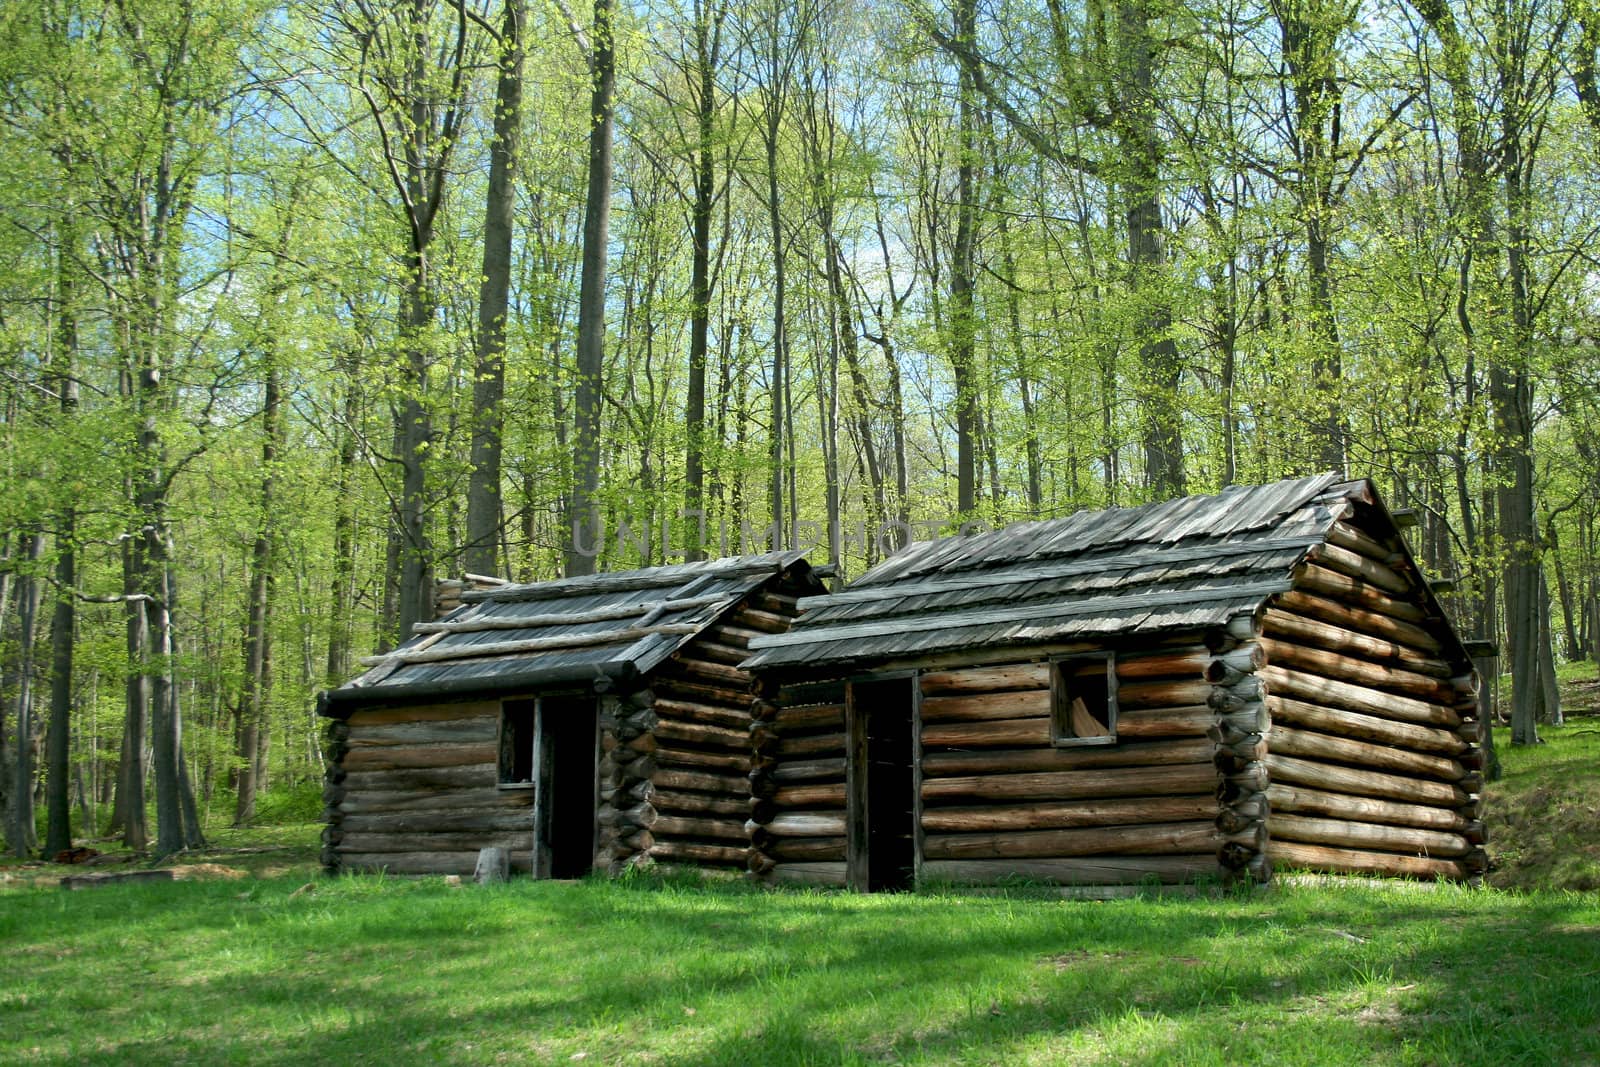 A Revolutionary War troop cabins